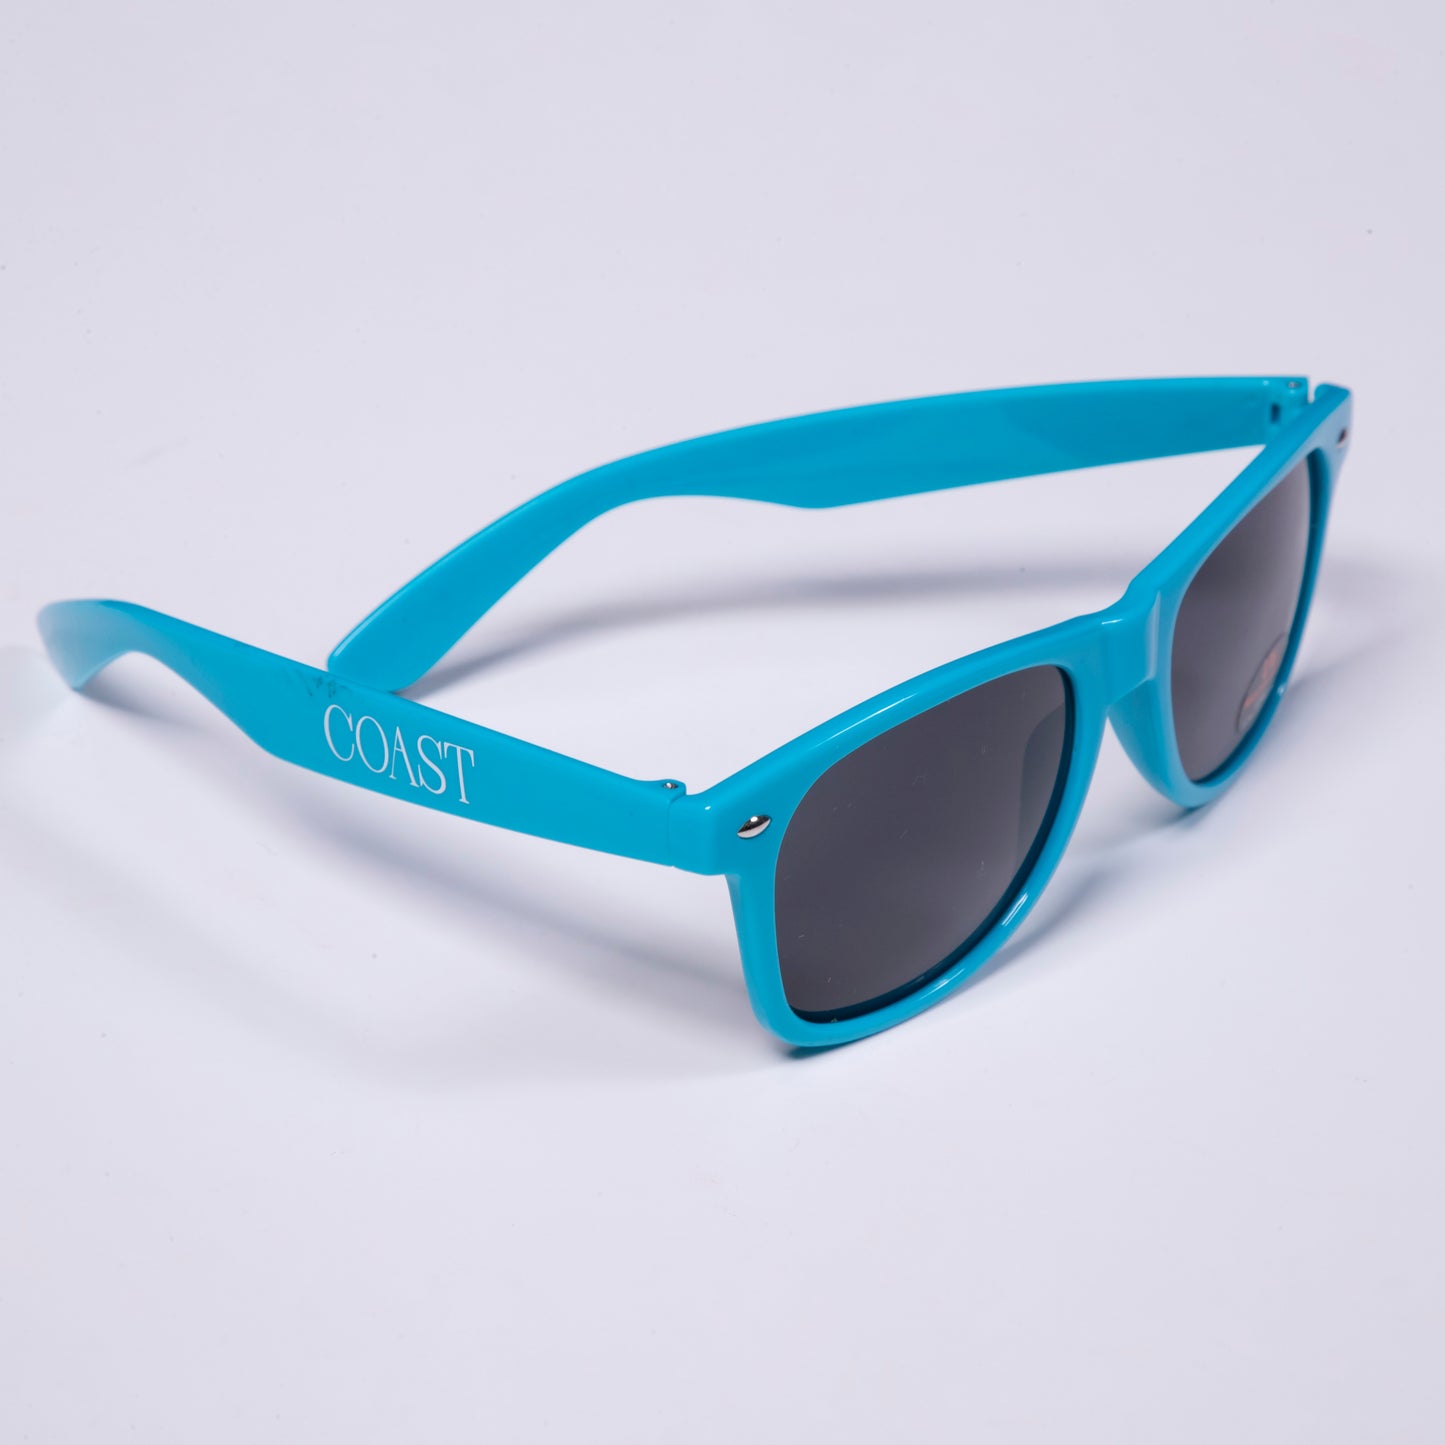 Coast Sunglasses (Turquoise)